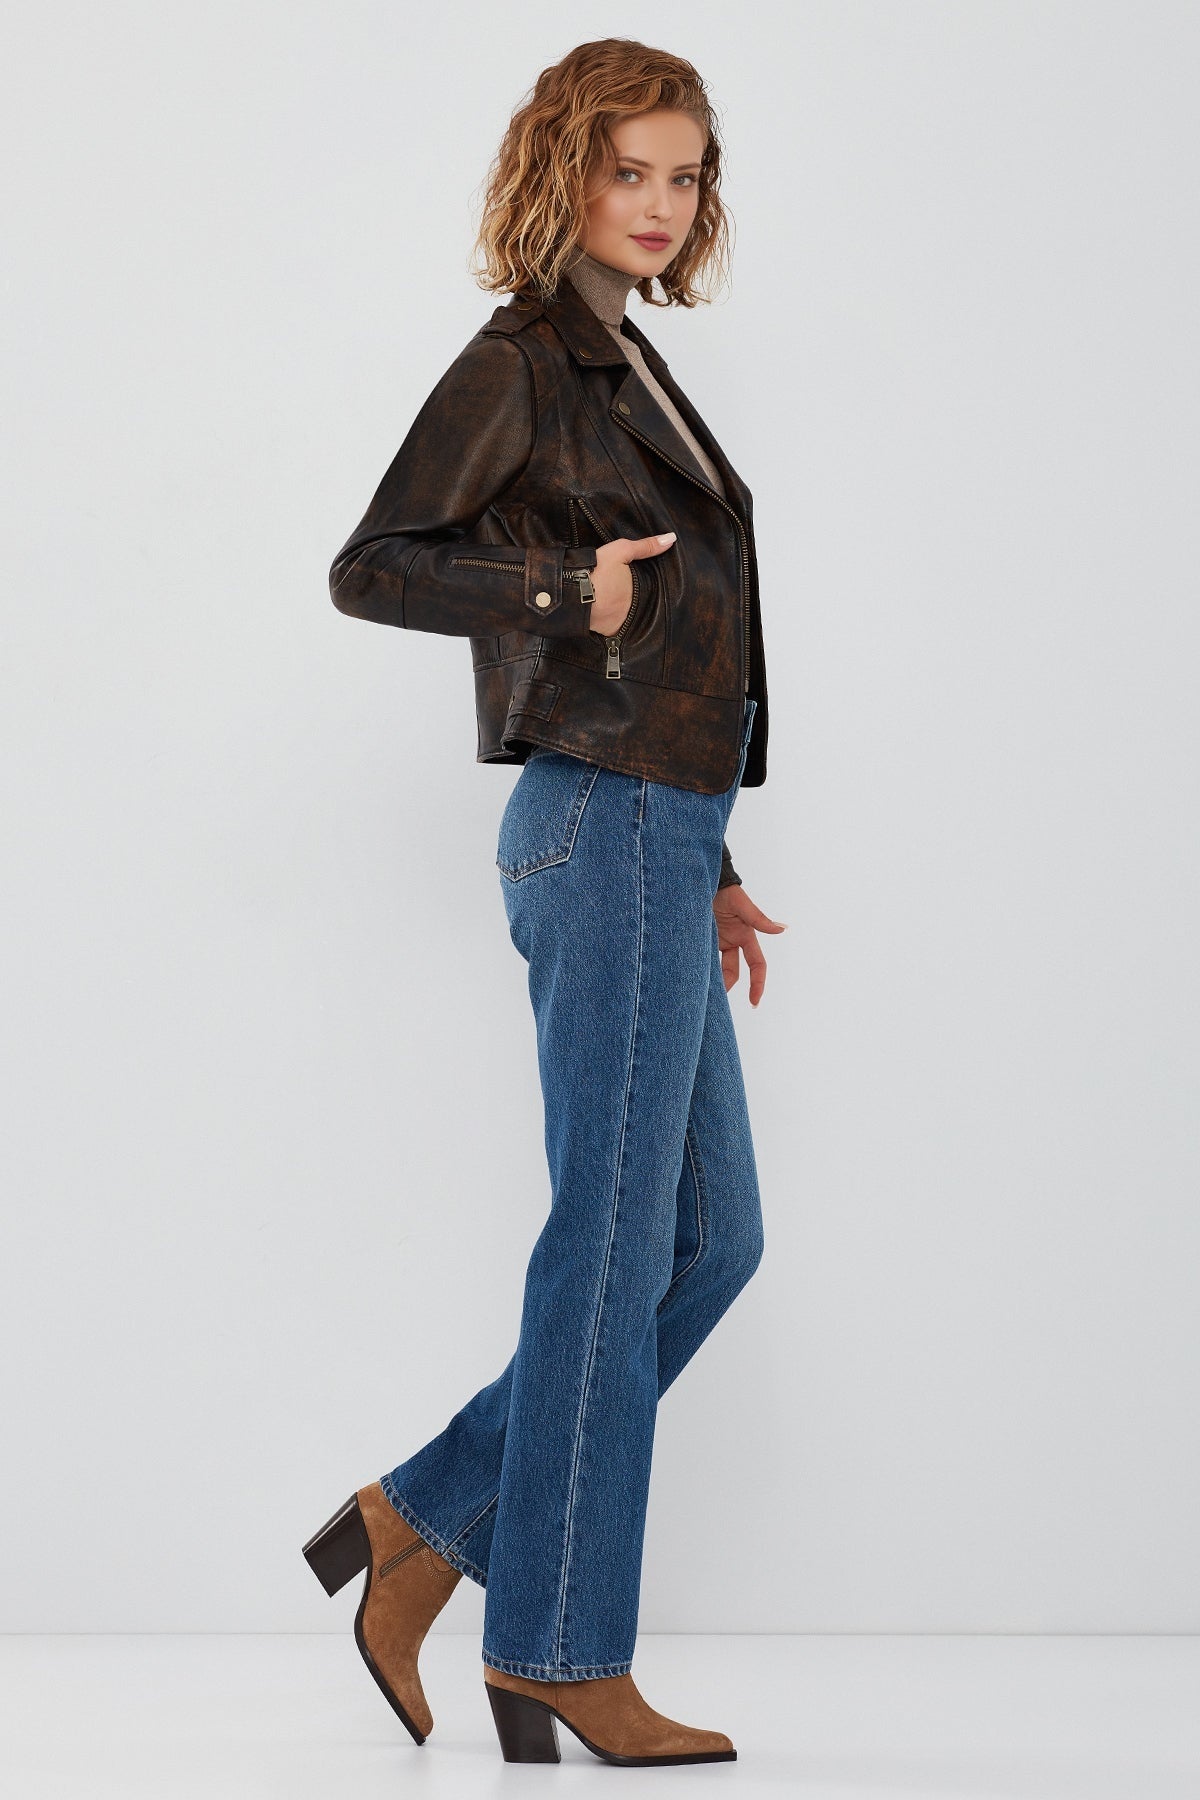 Newyork Women's Brown Vintage Leather Jacket